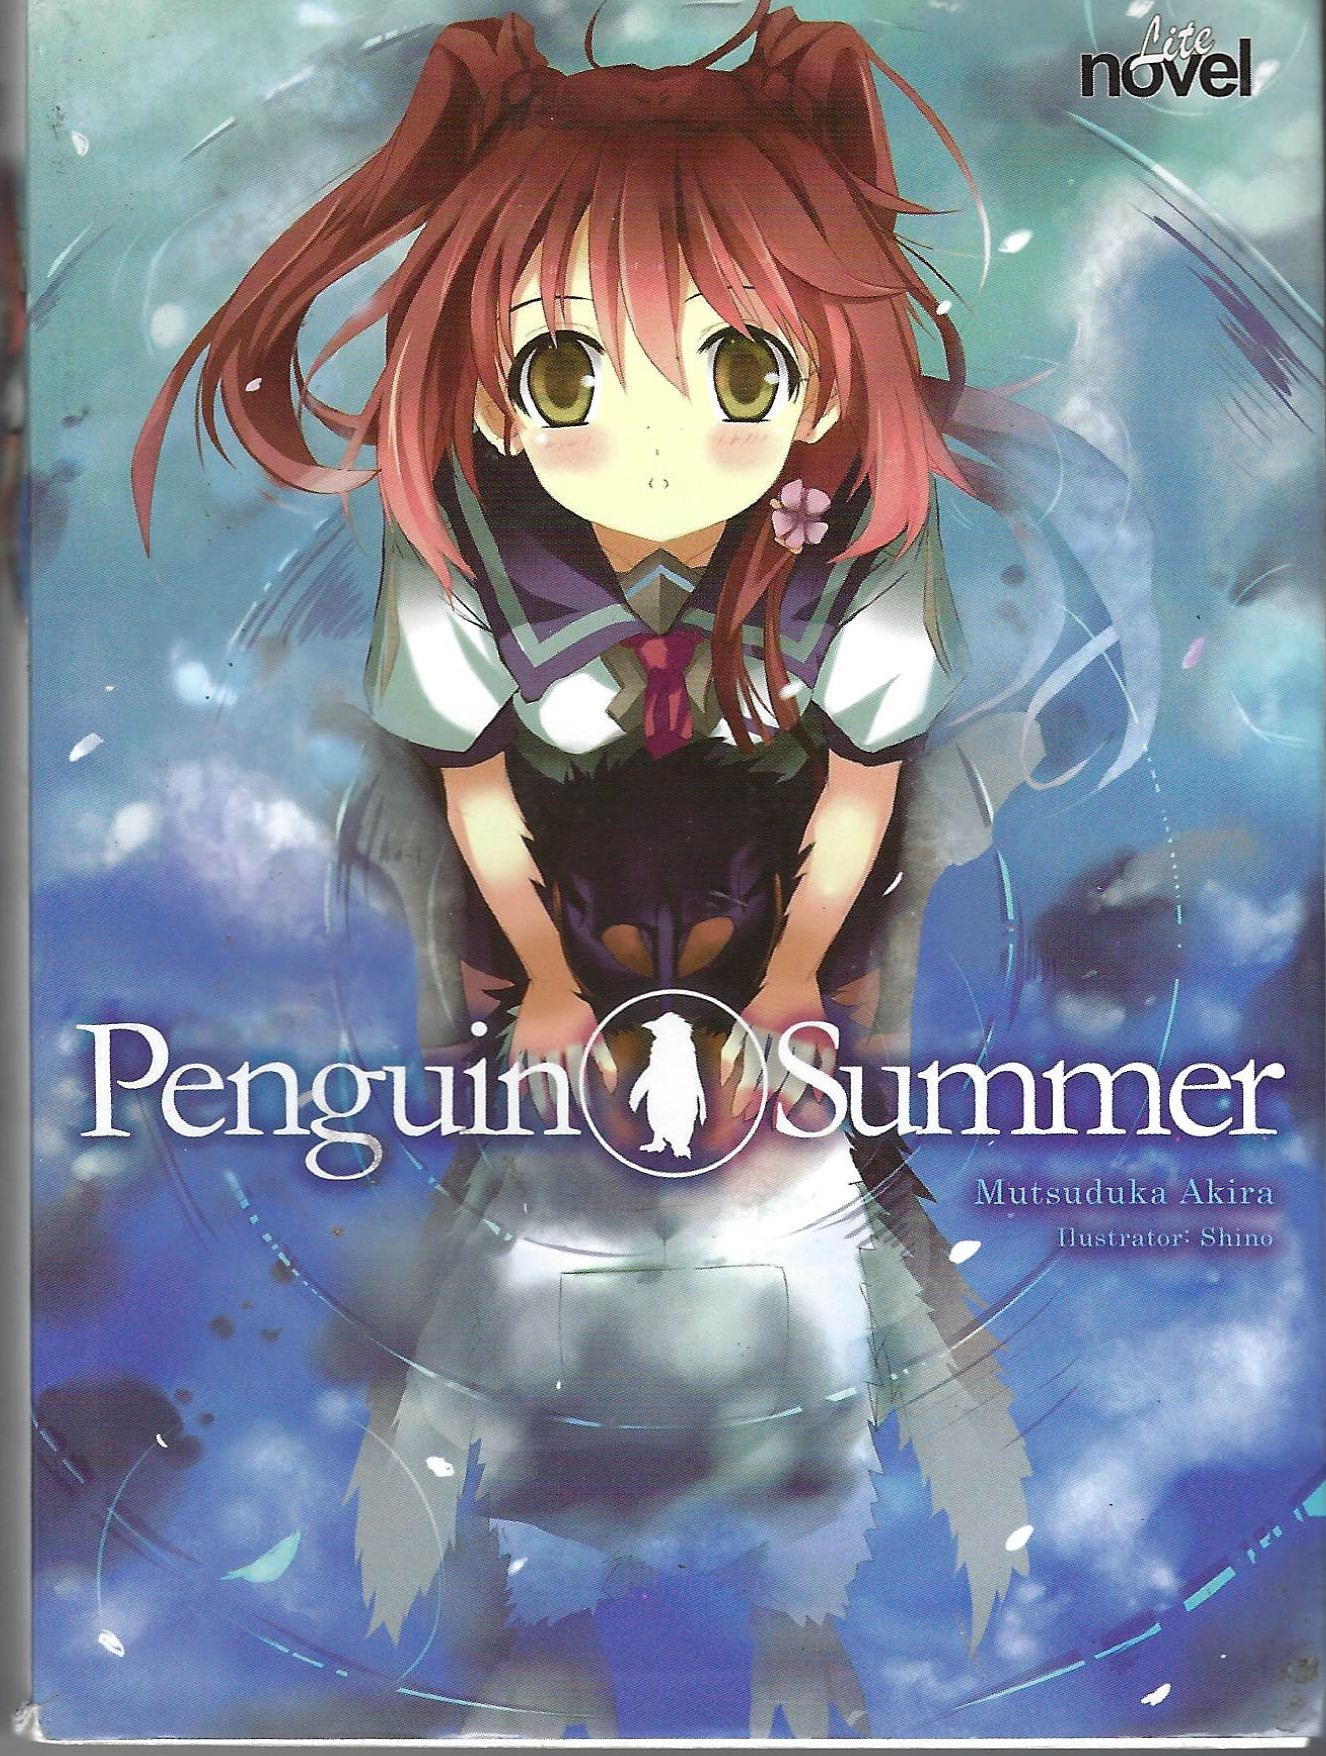 Penguin summer